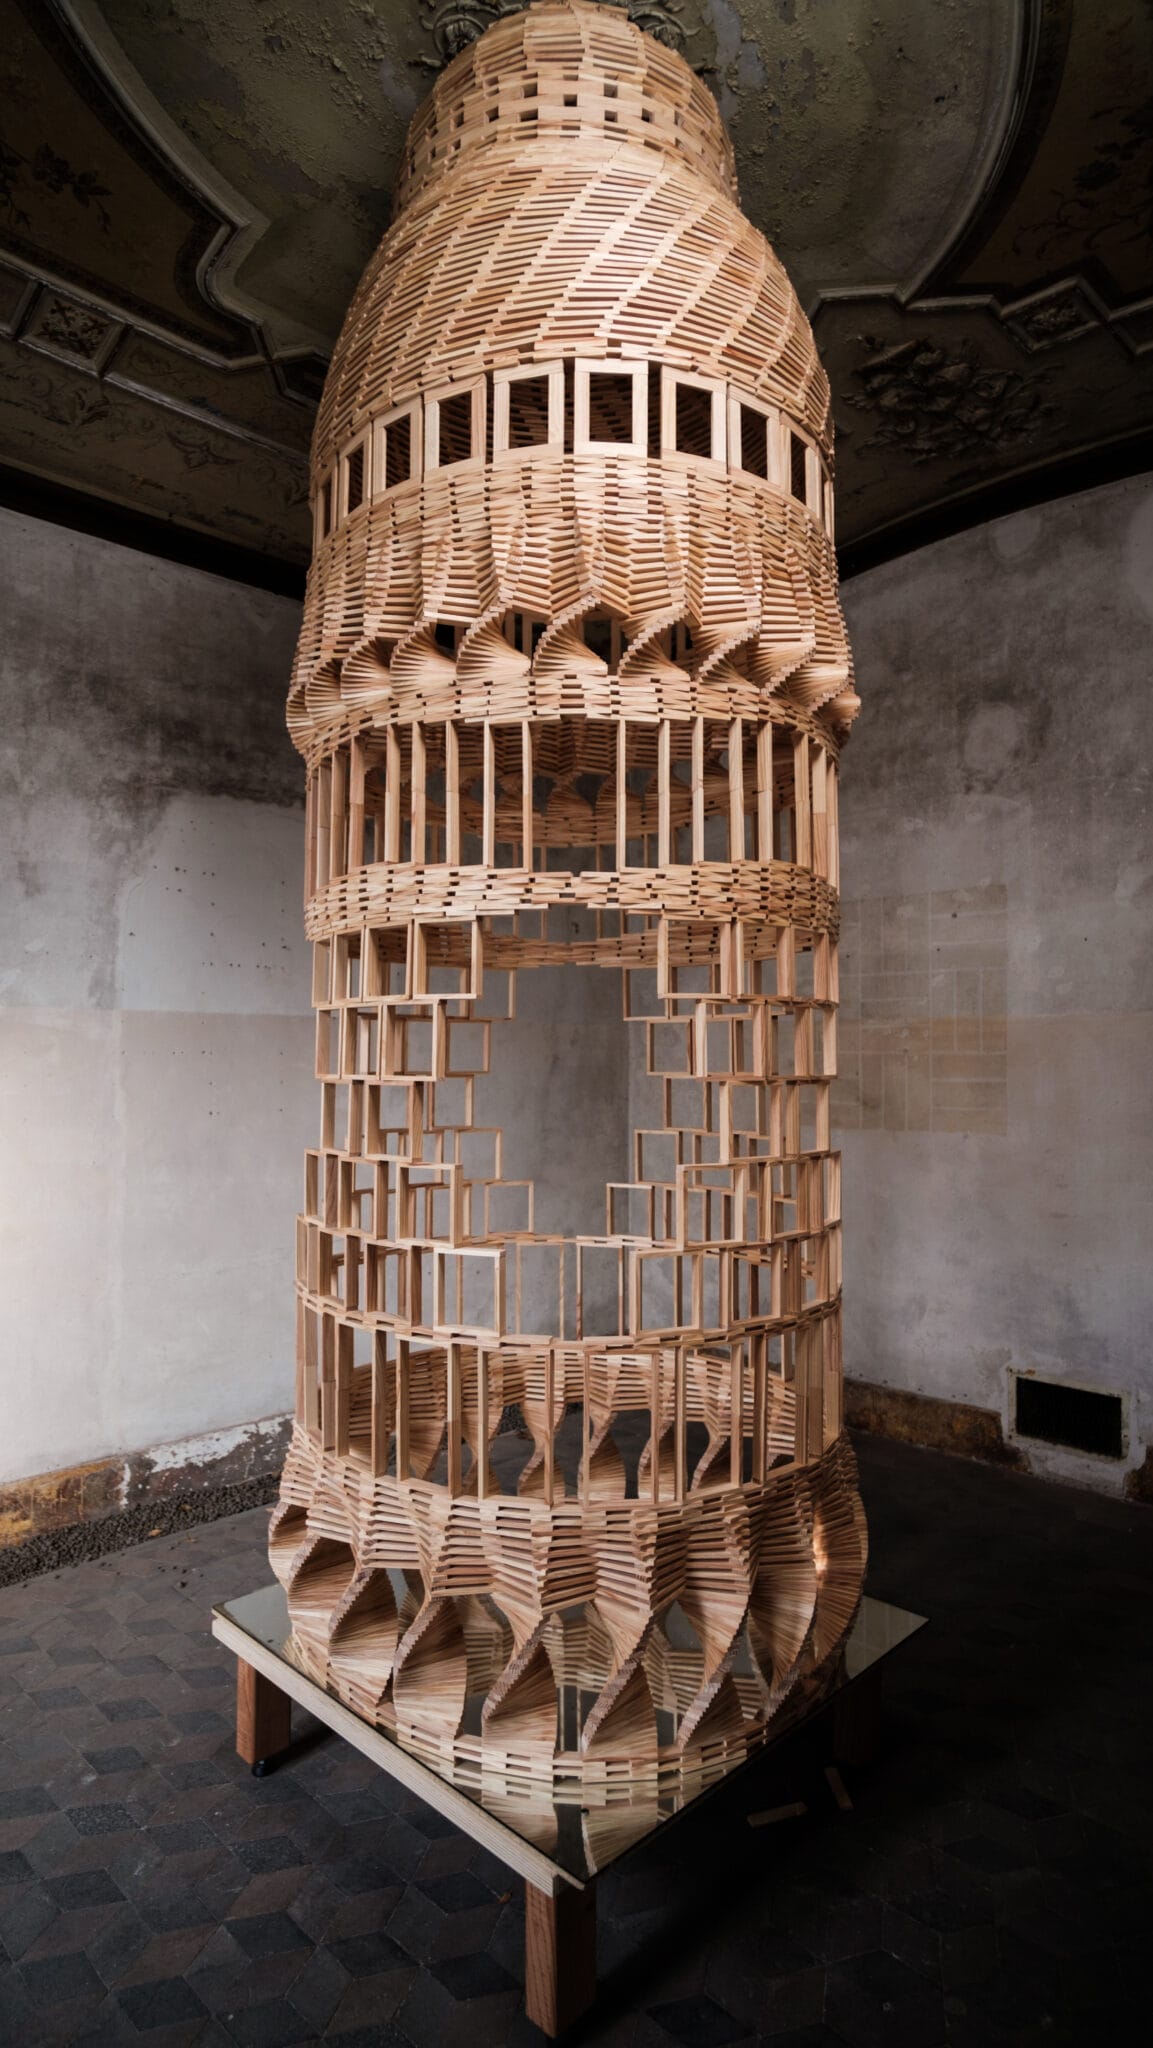 Balancing Act, The Gravity Defying Architectural Installations Of Raffaele Salvoldi (2)